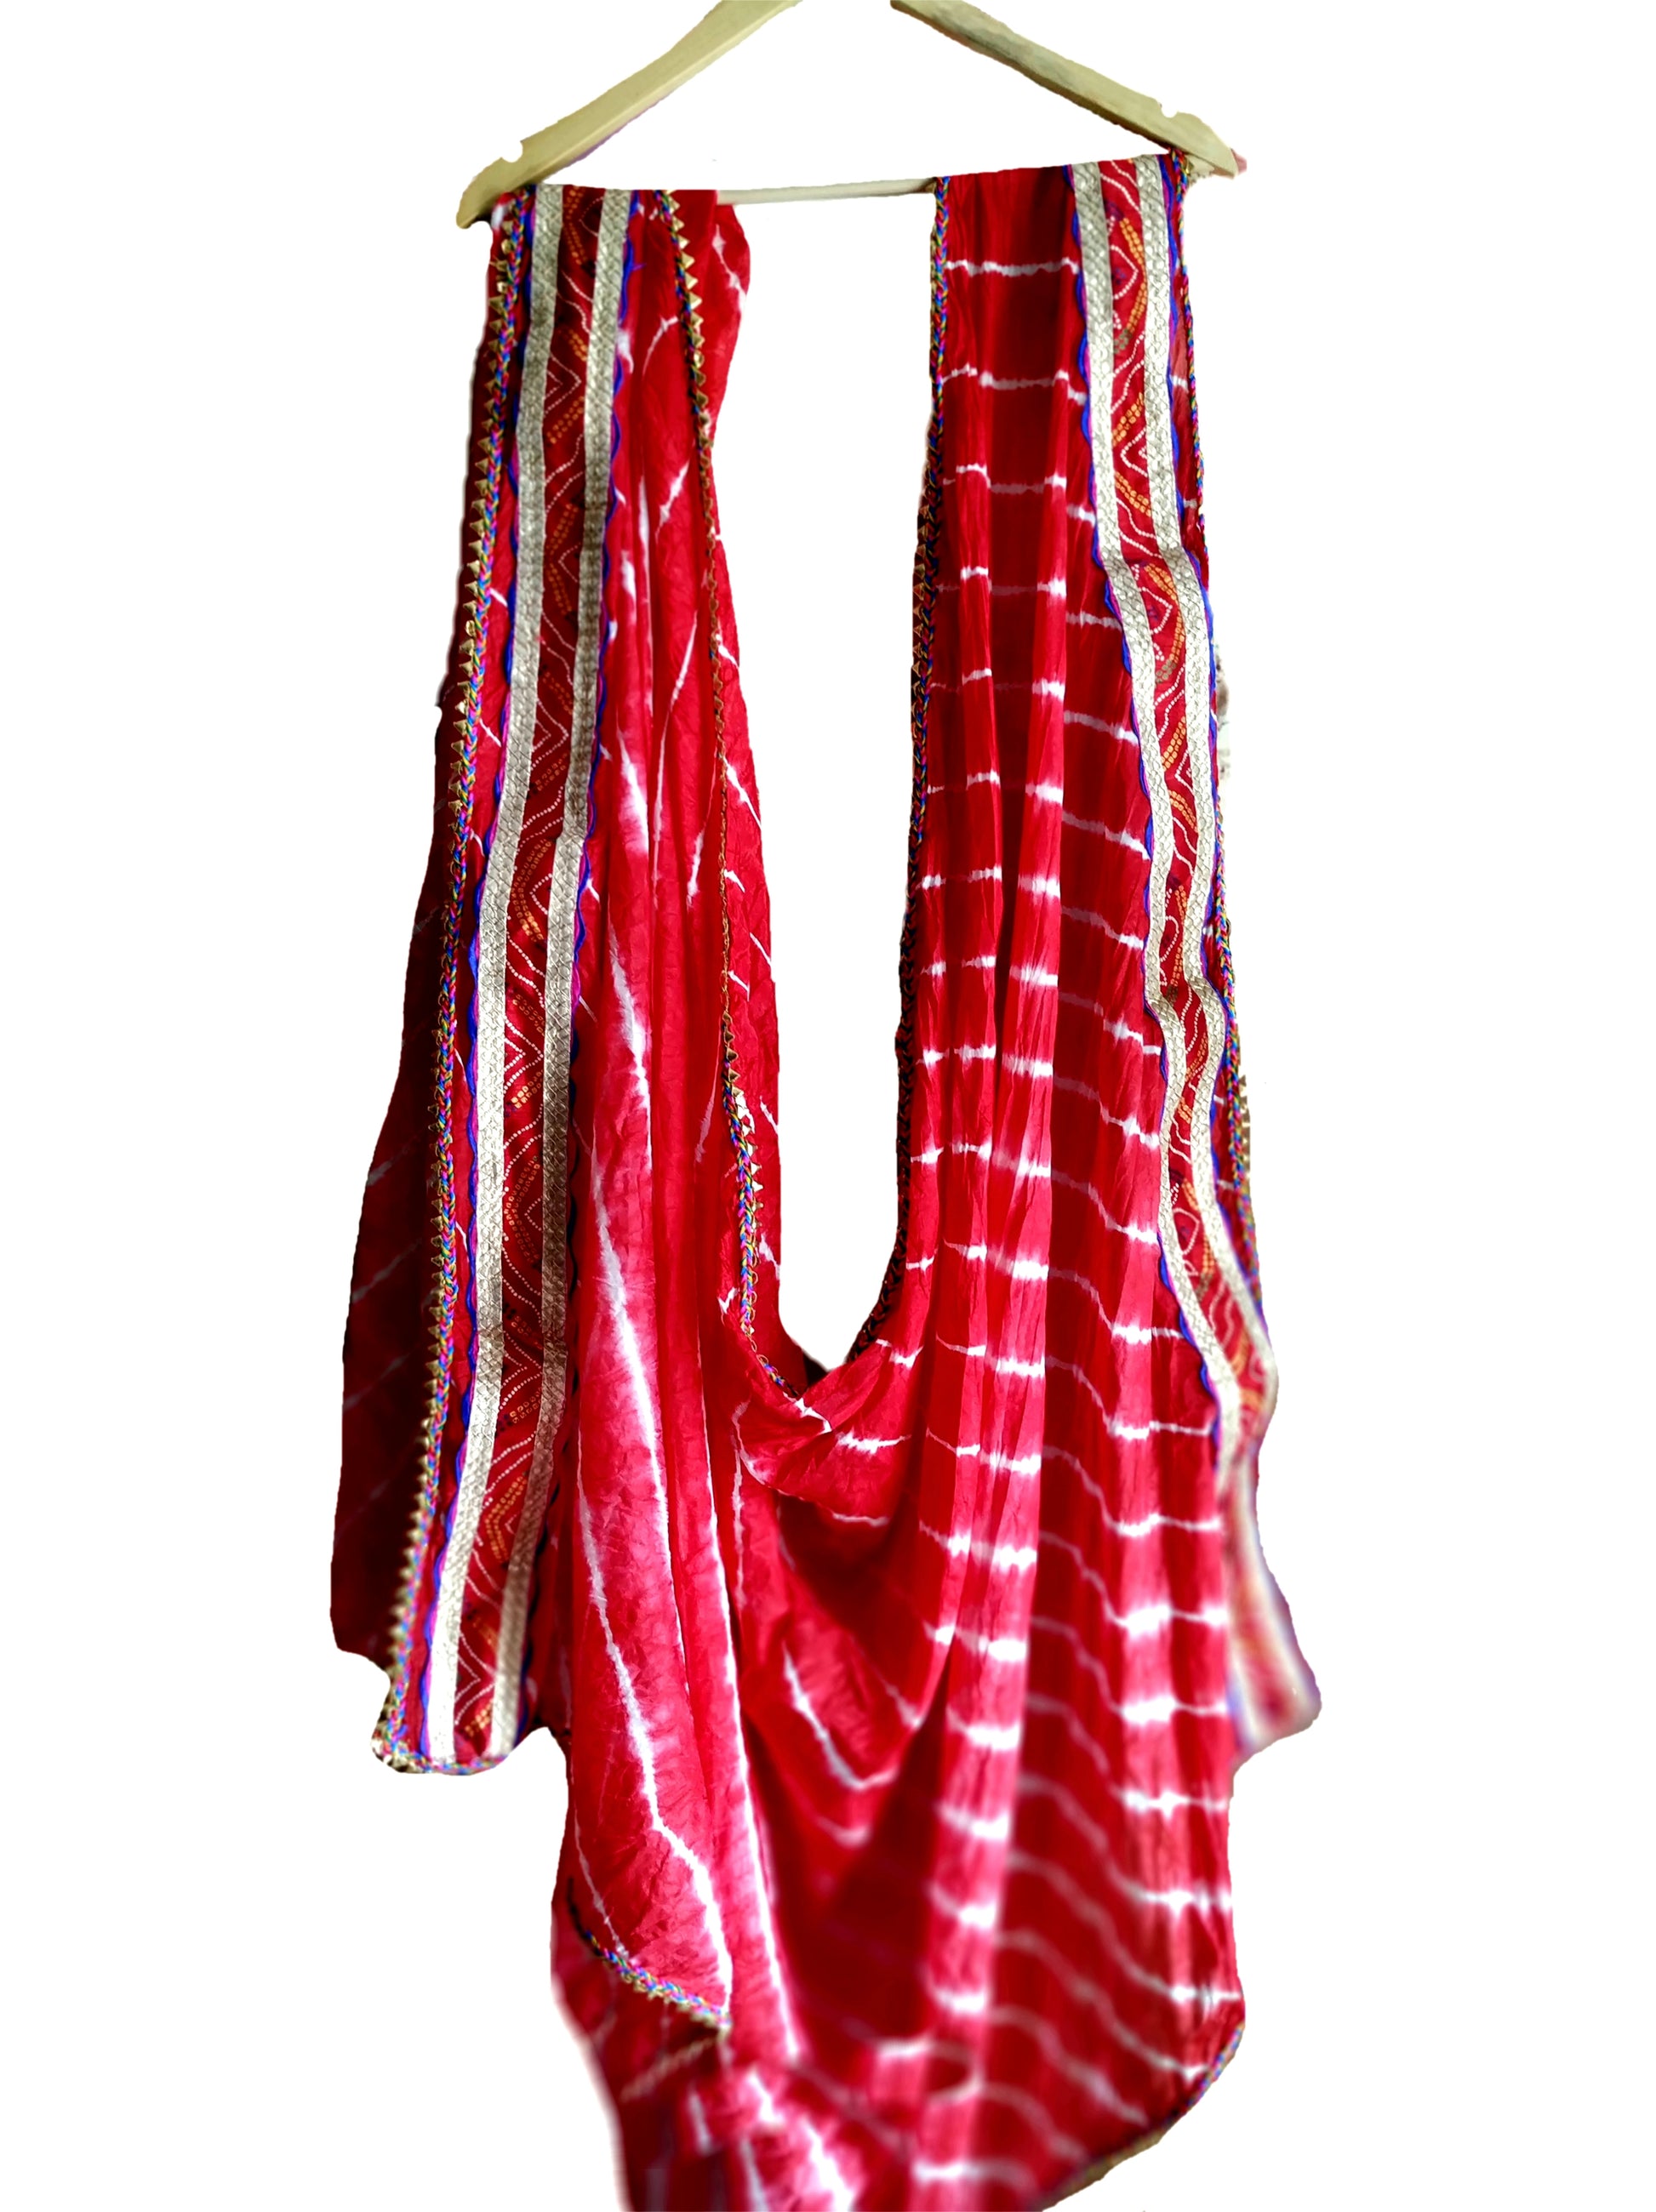 Urban Wardrobe's Red Leheriya Dupatta